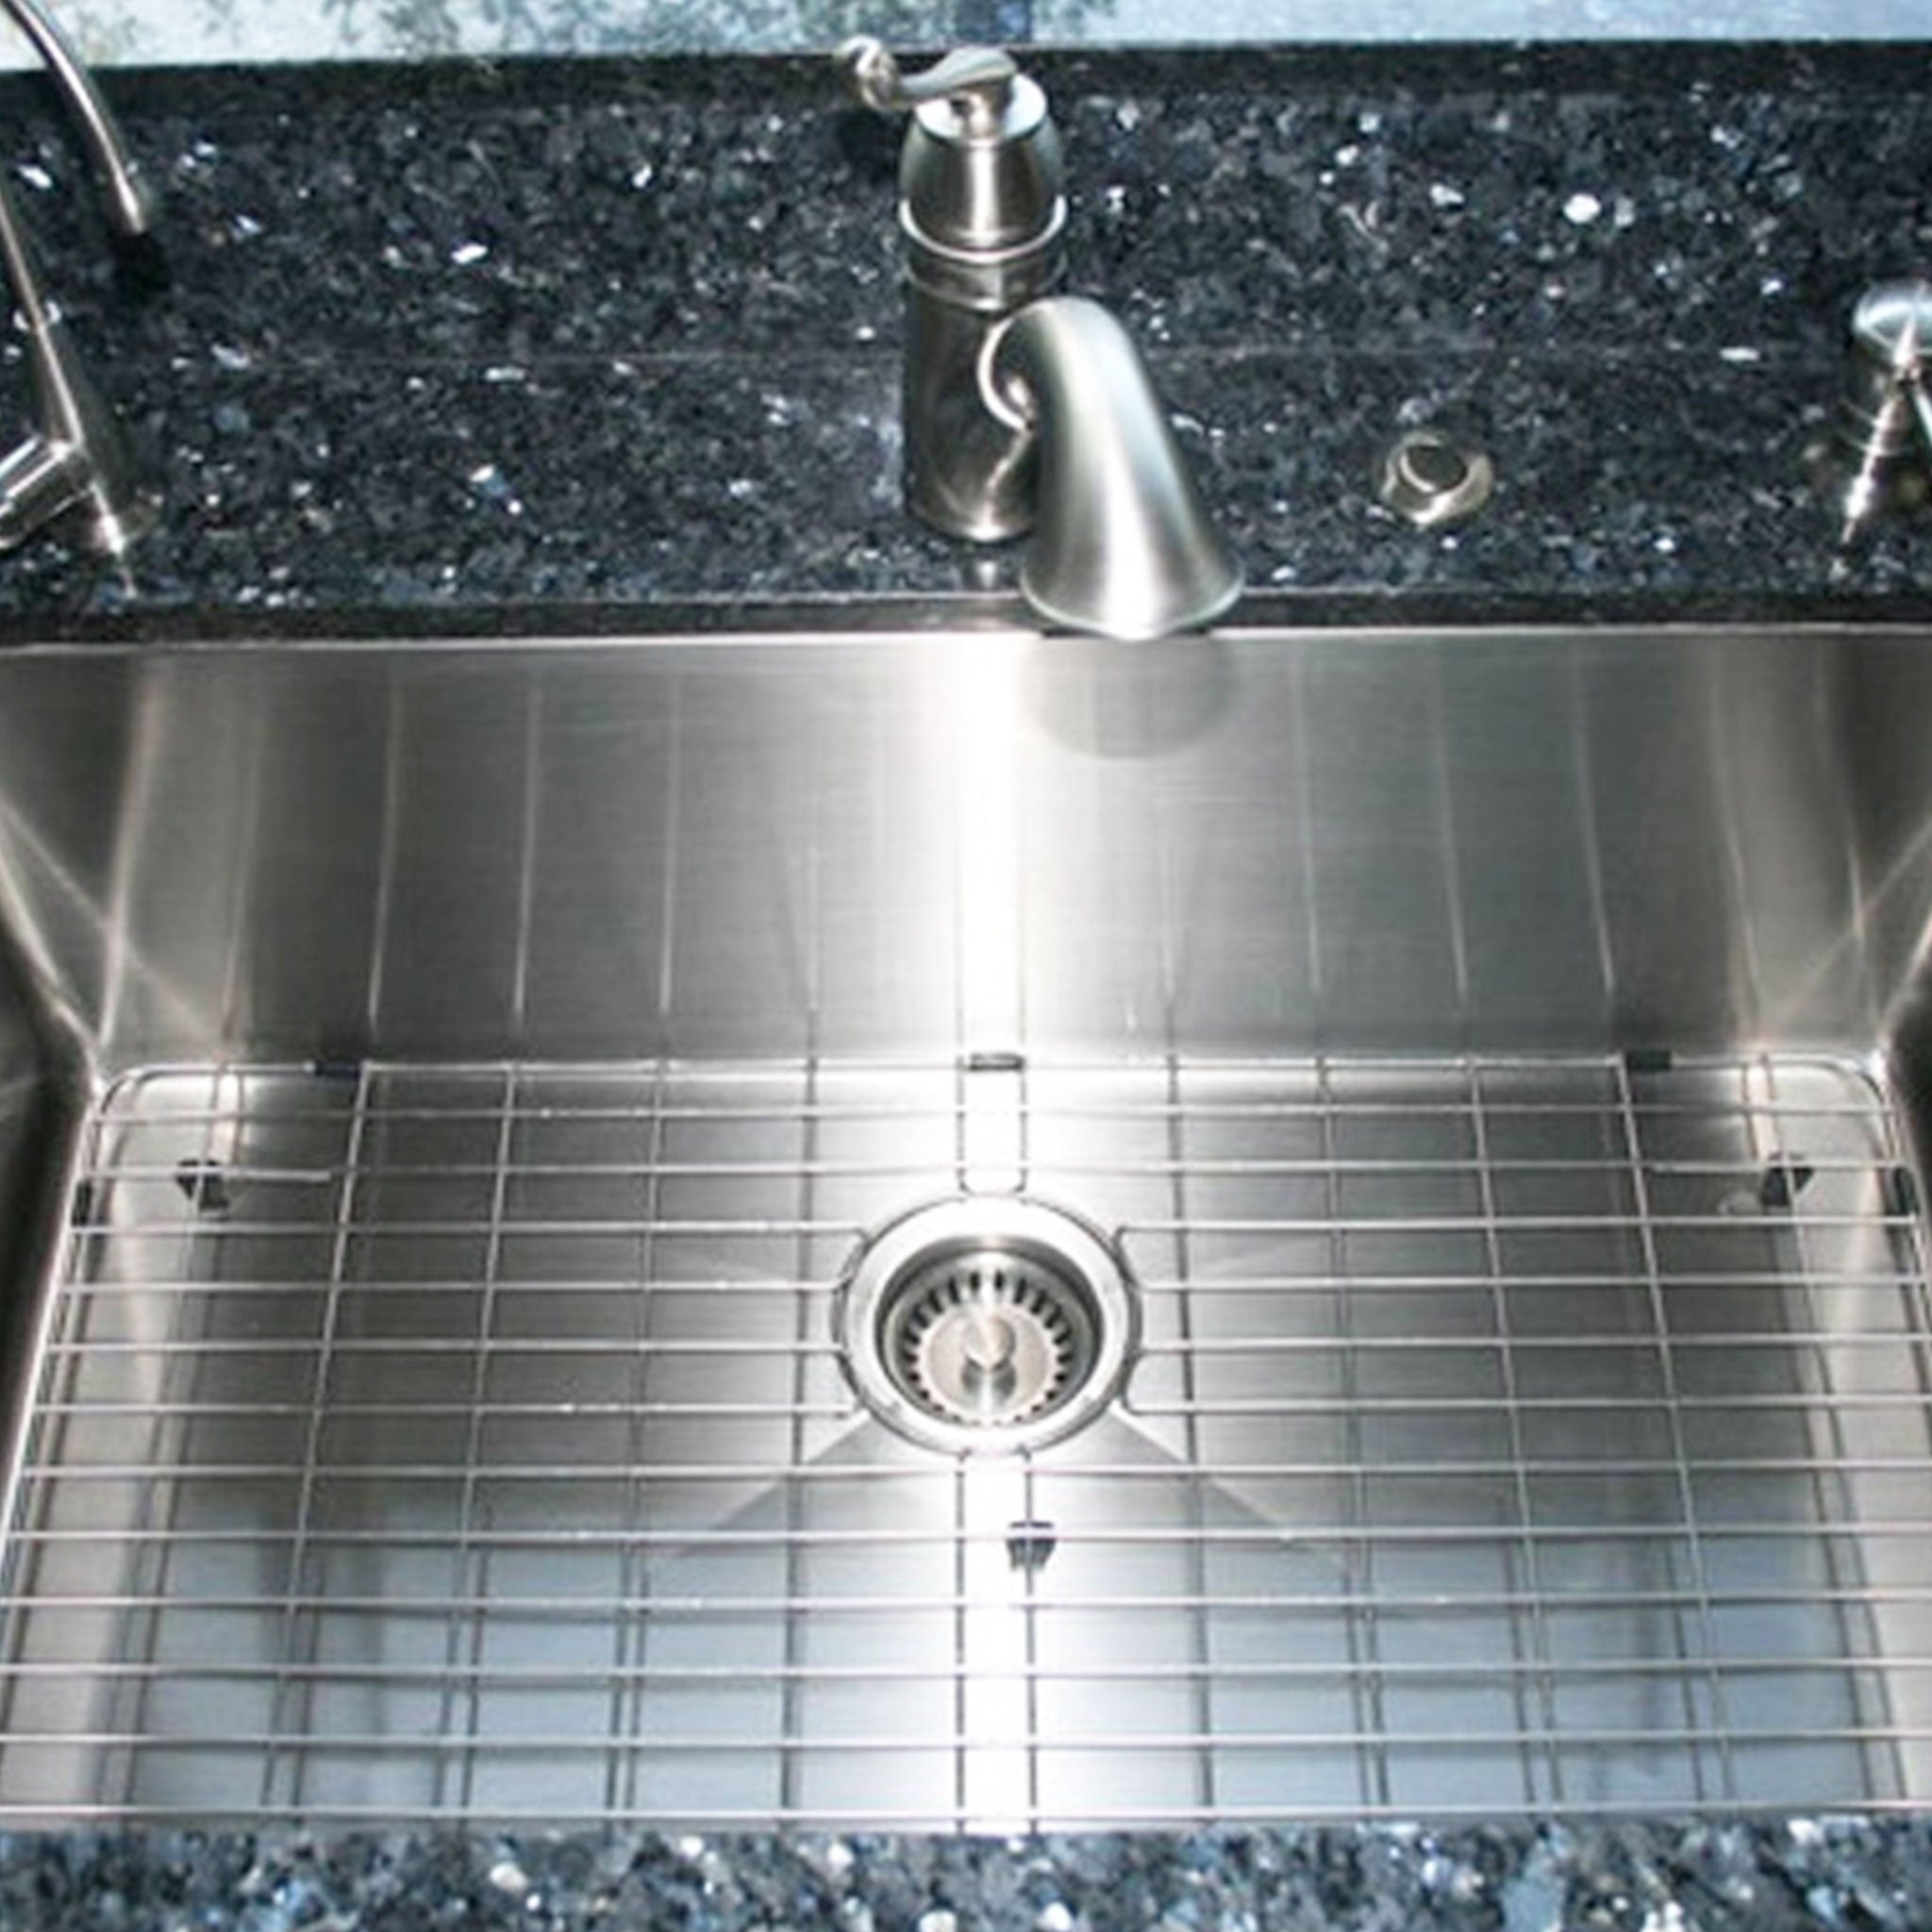 GRID - 32 stainless steel sink grid - center drain (GR-5S32)